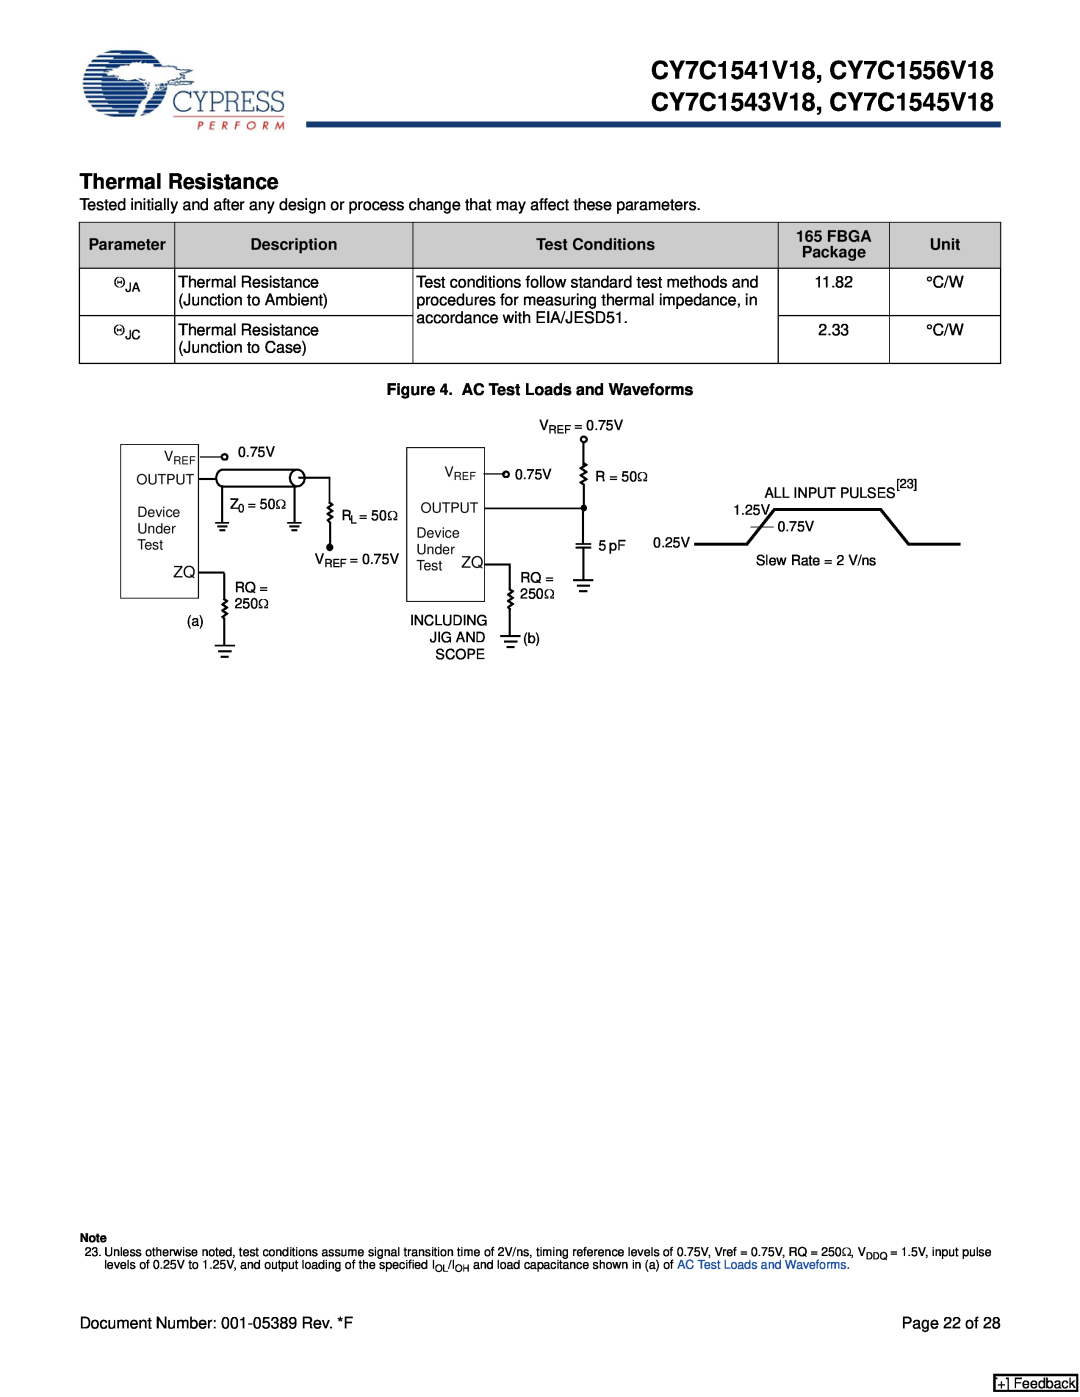 Cypress manual Thermal Resistance, CY7C1541V18, CY7C1556V18 CY7C1543V18, CY7C1545V18, Package 